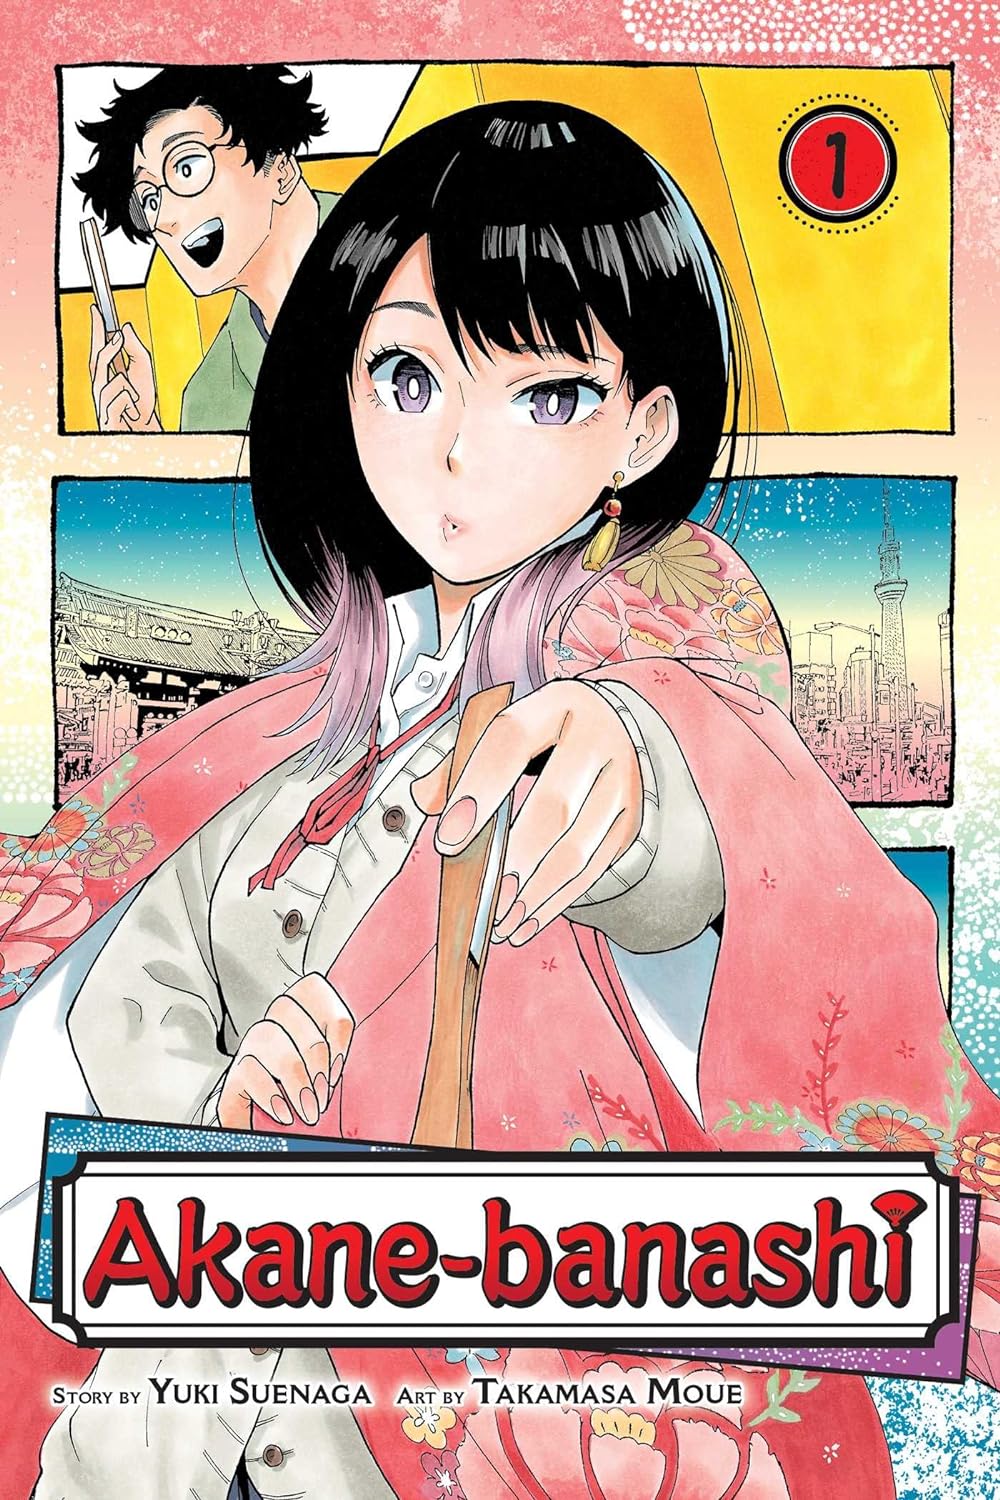 Akane Banashi vol. 1 from VIZ Media